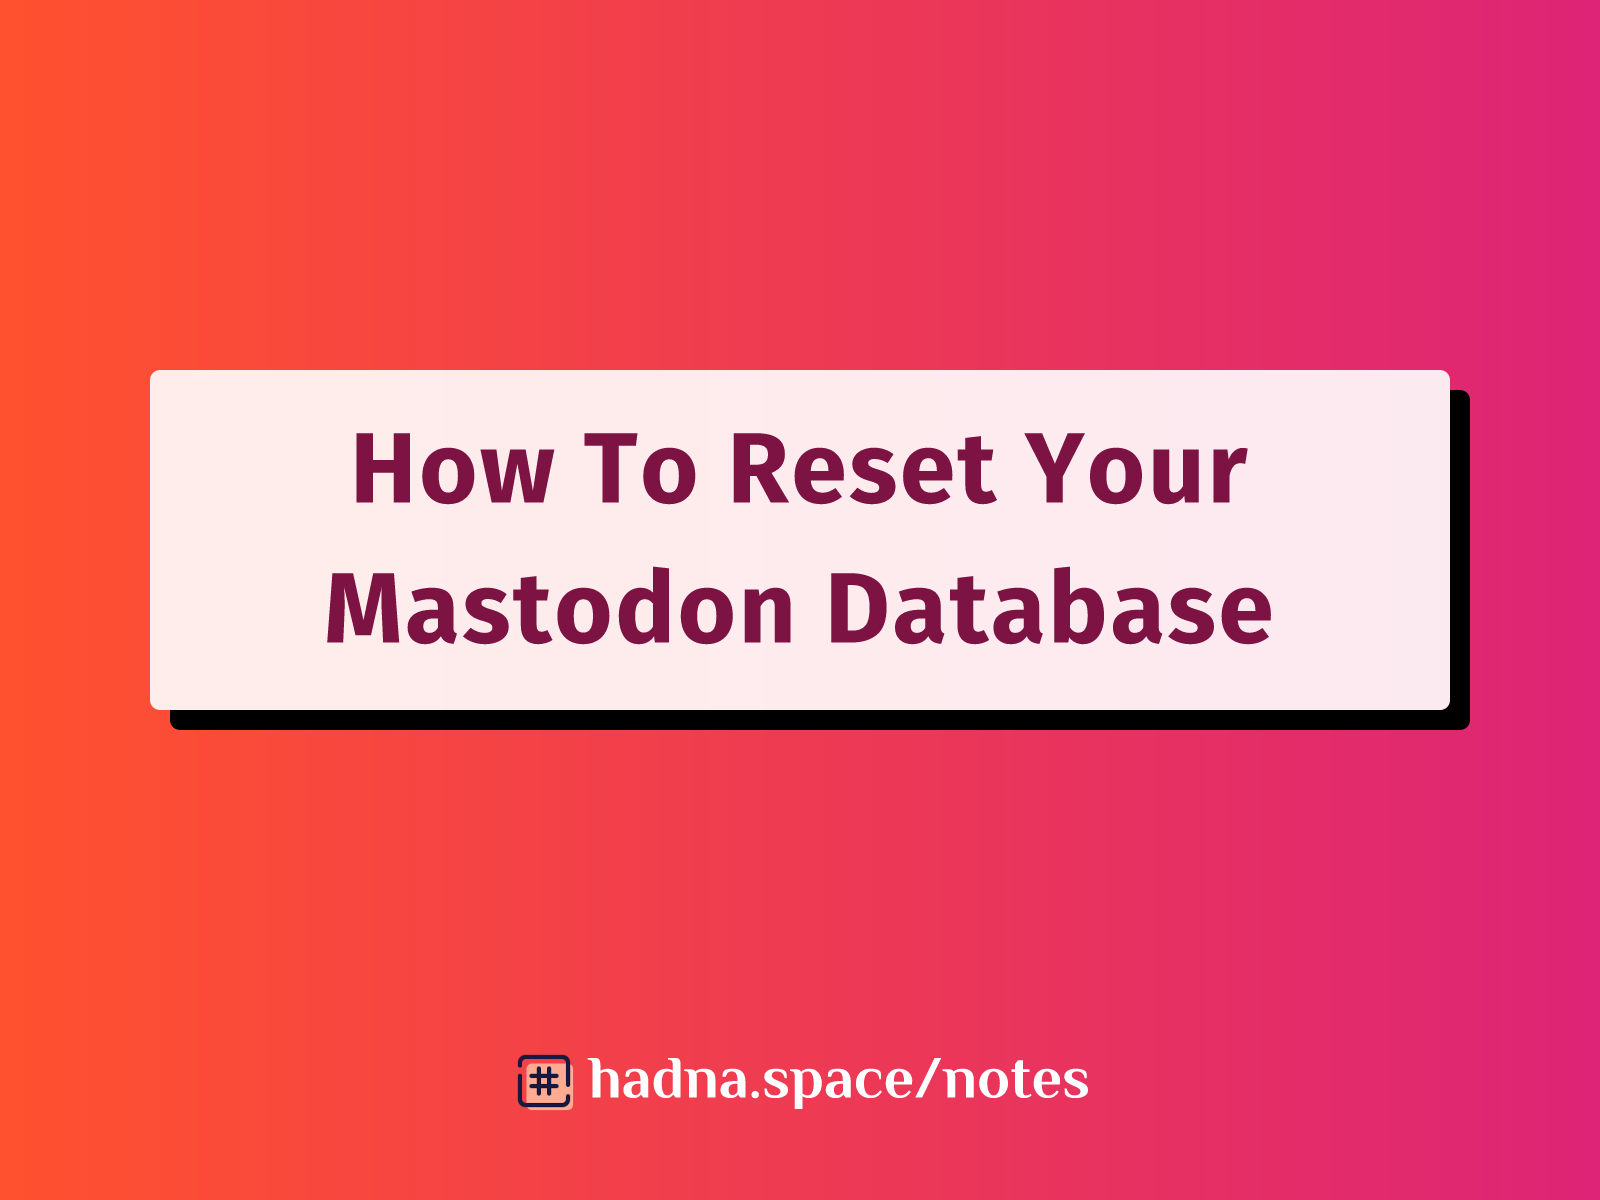 How To Reset Your Mastodon Database